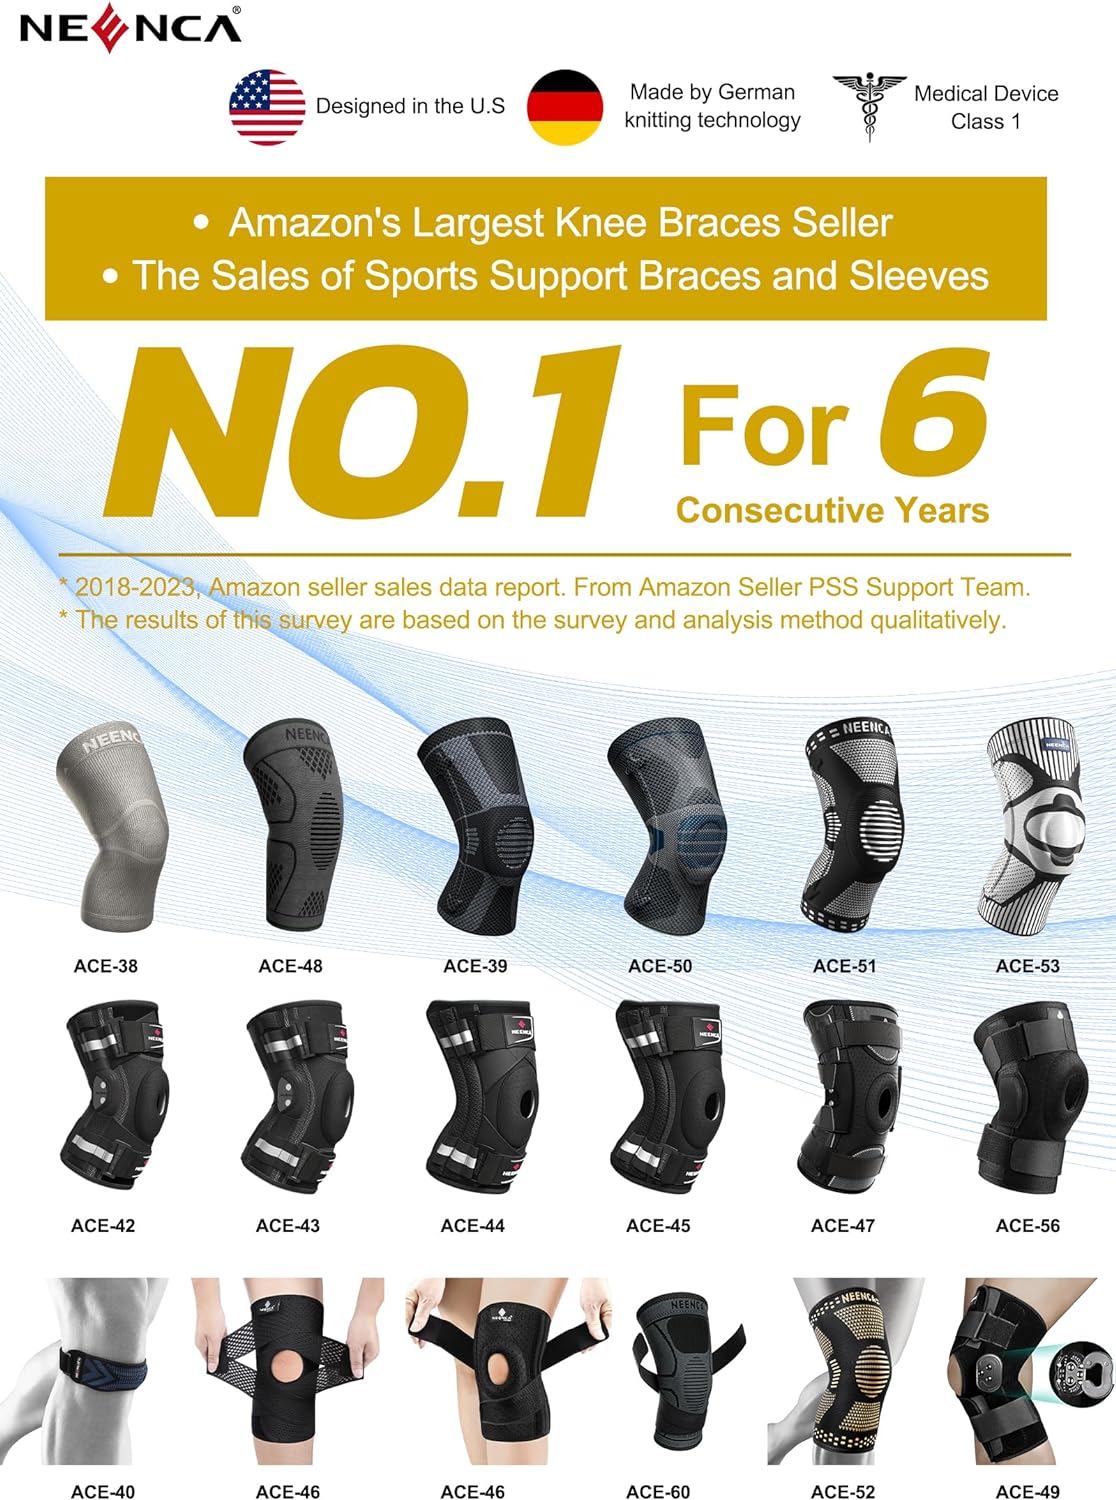 NEENCA Professional Knee Brace Review